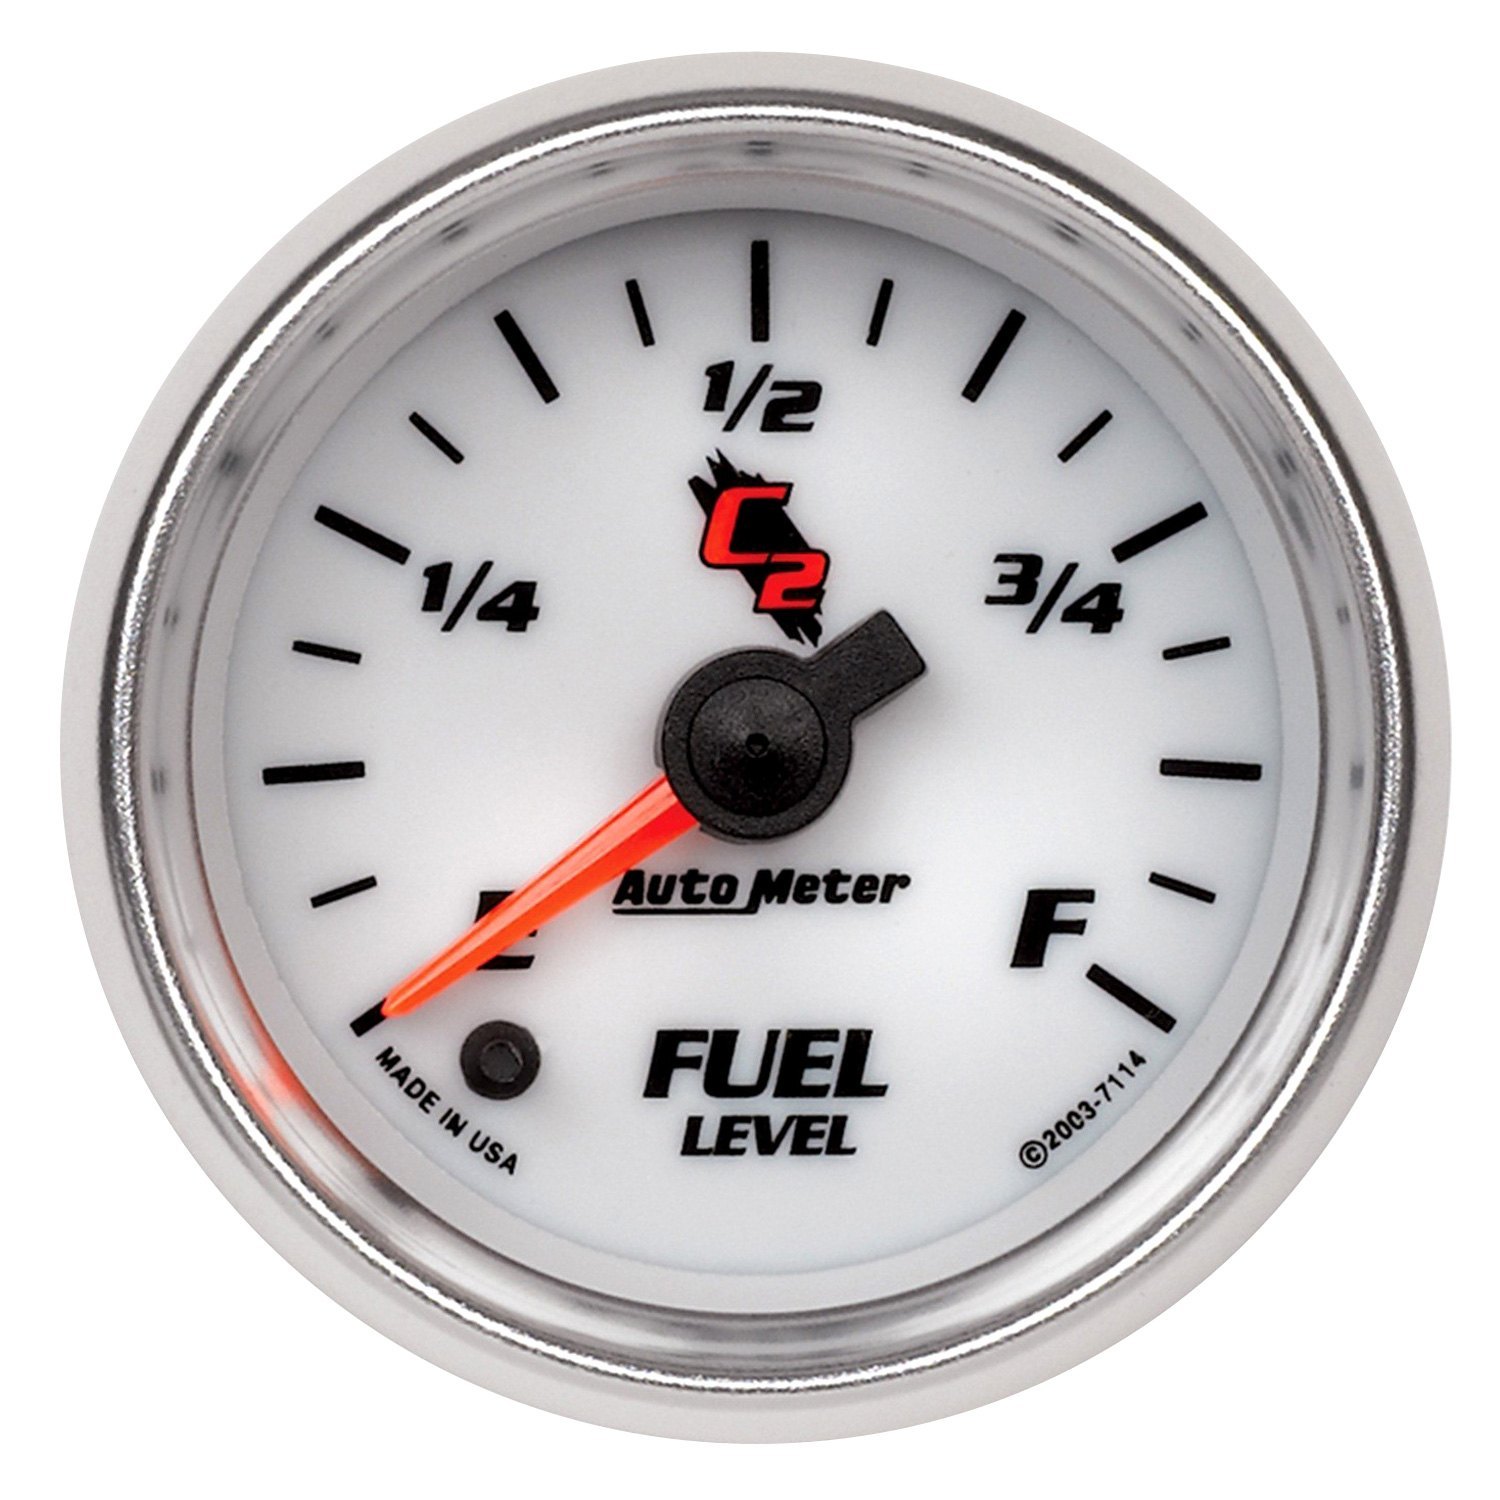 Fuel level